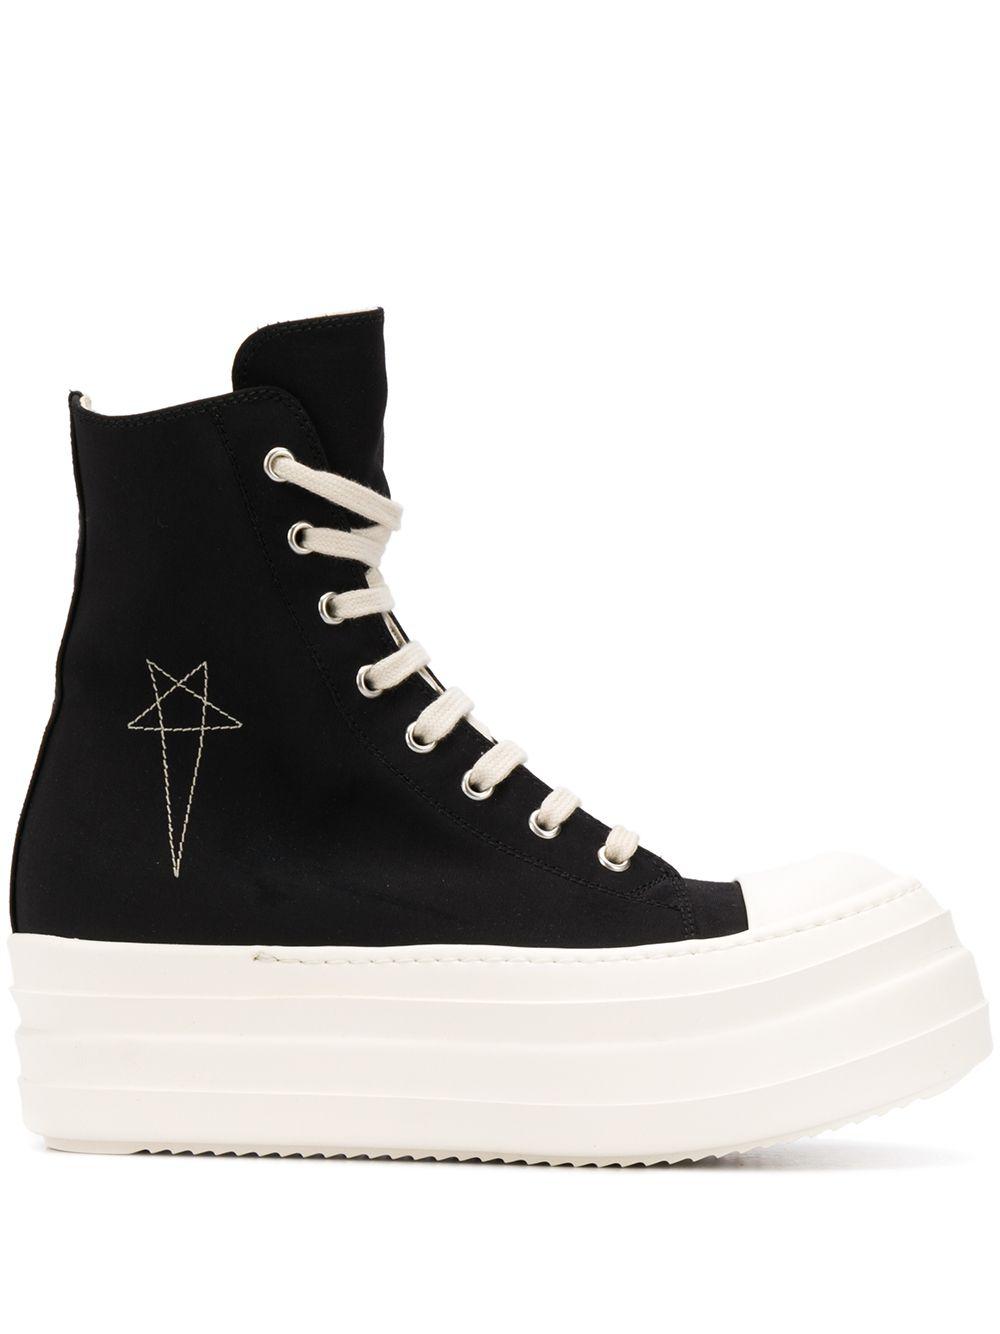 Rick Owens DRKSHDW Platform Embroidered Star Sneakers in Black | Lyst